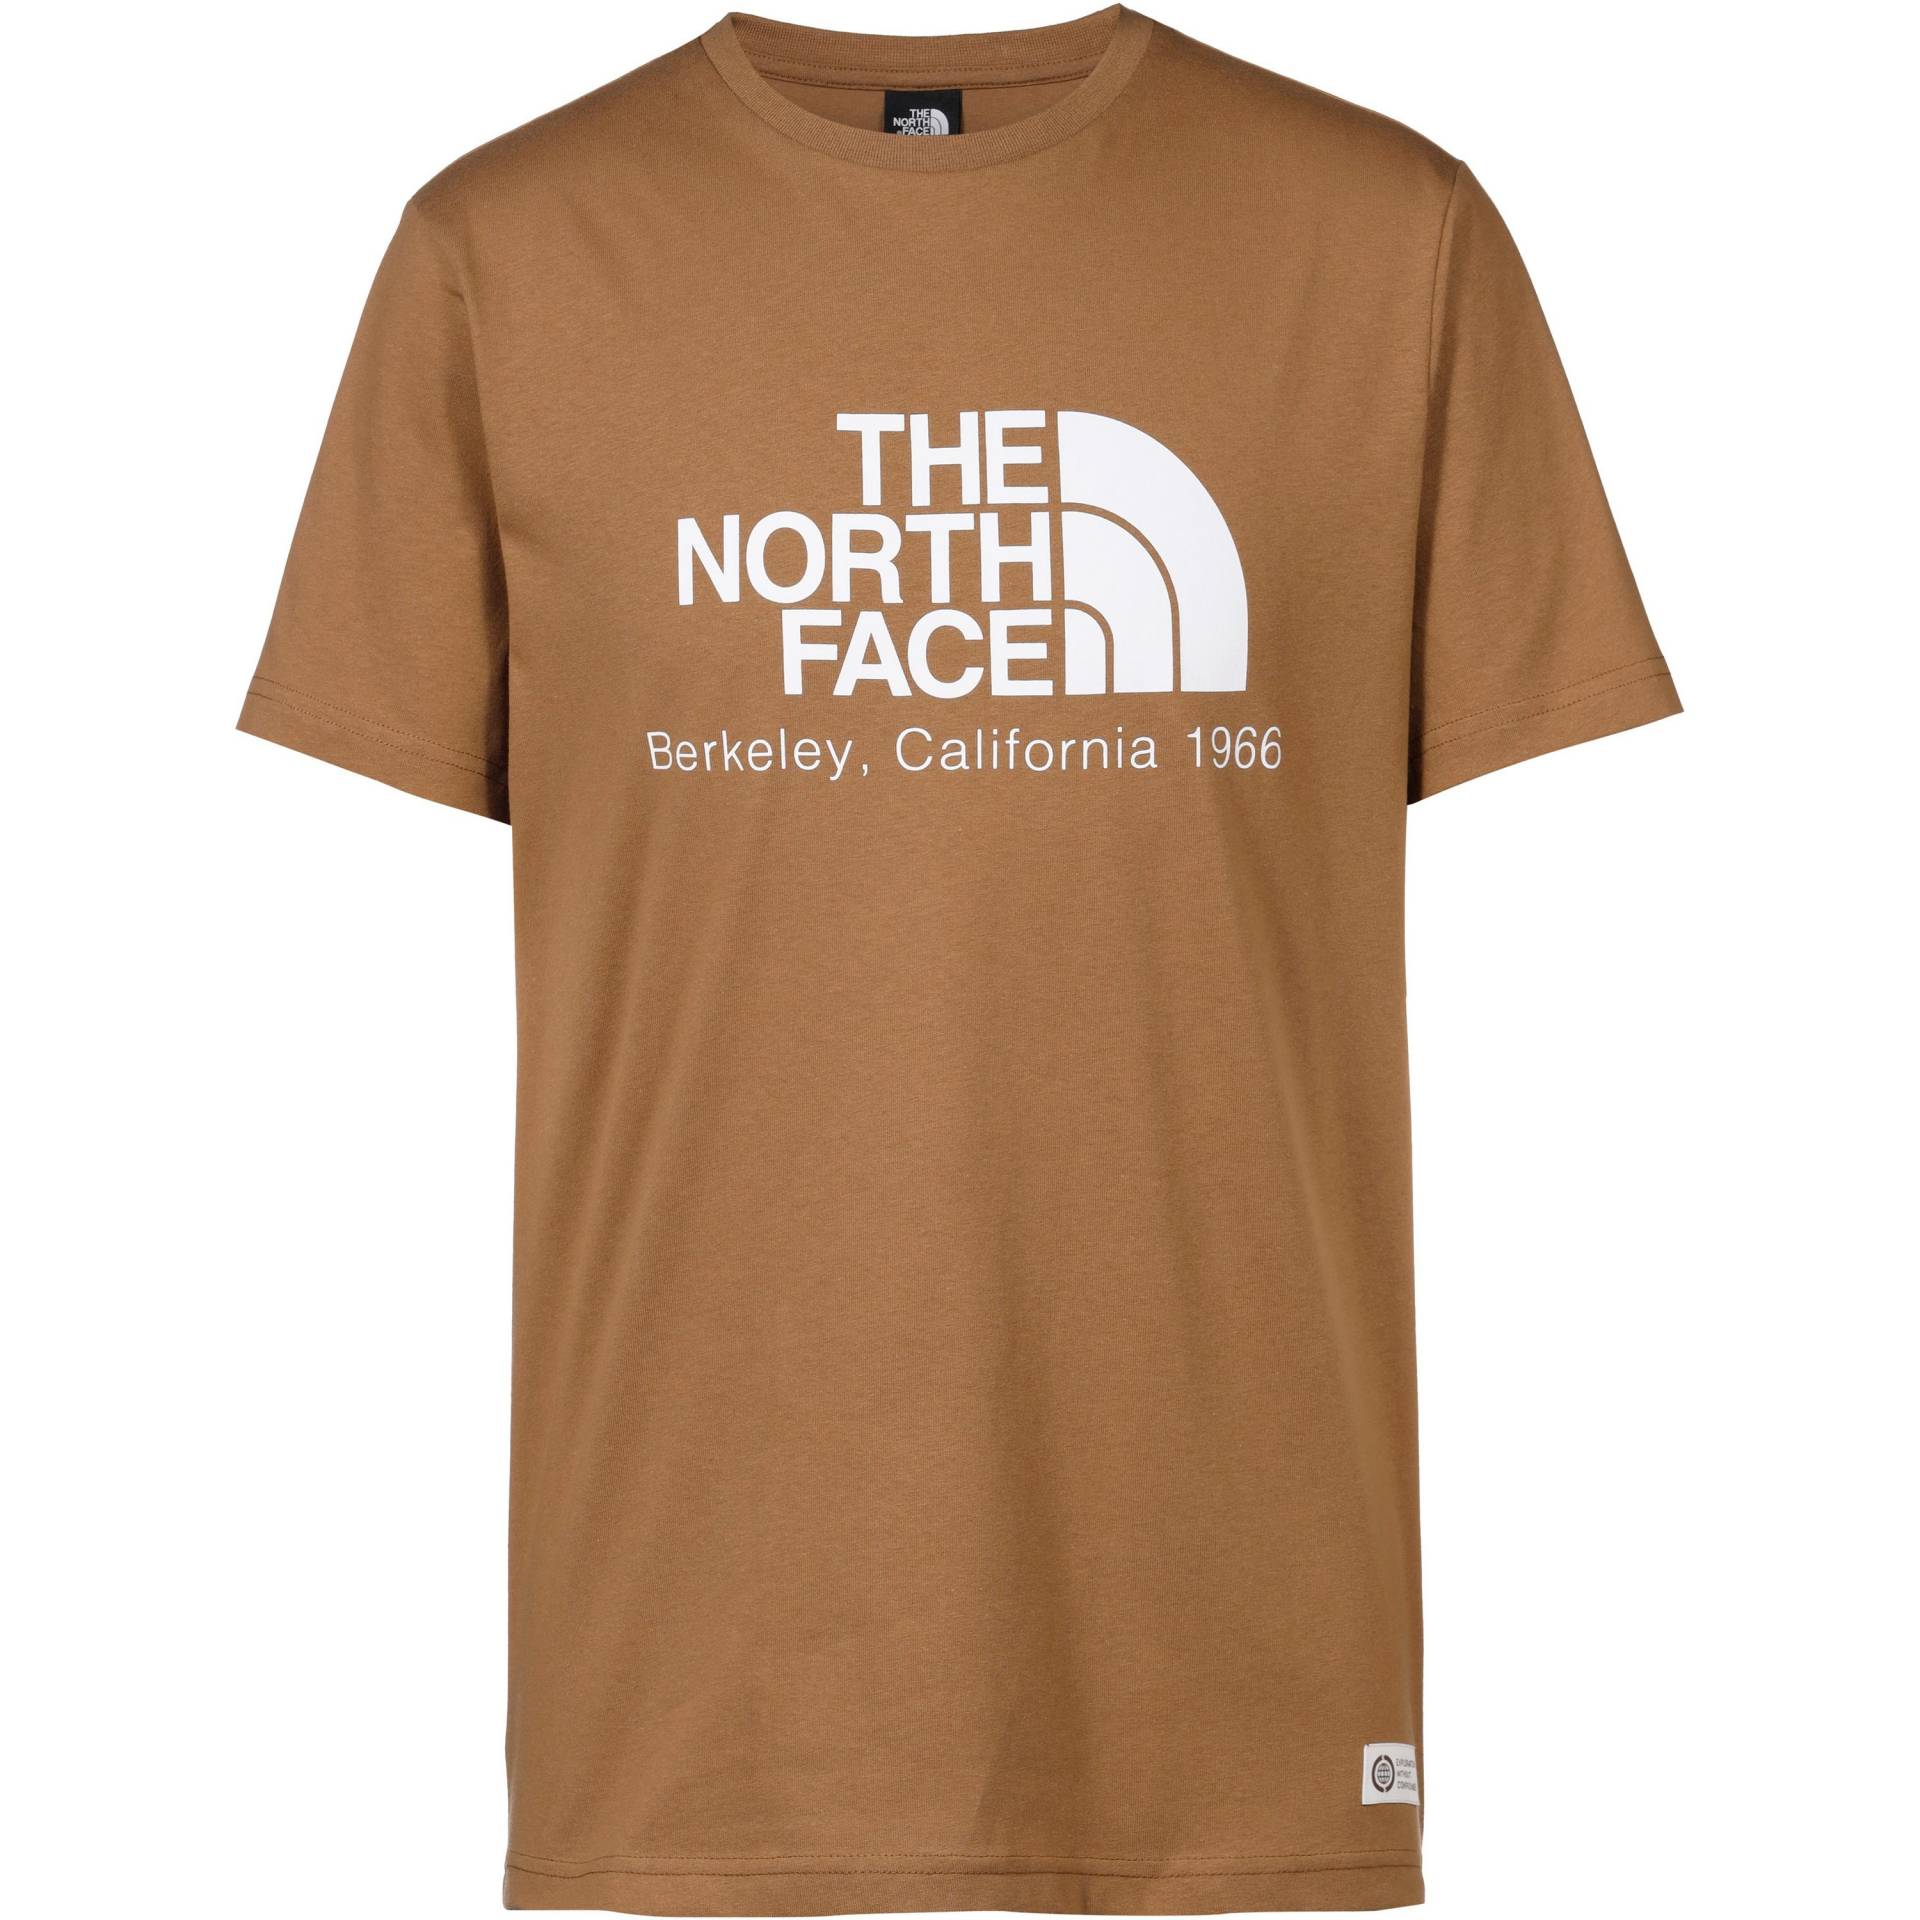 The North Face Berkeley California T-Shirt Herren von The North Face